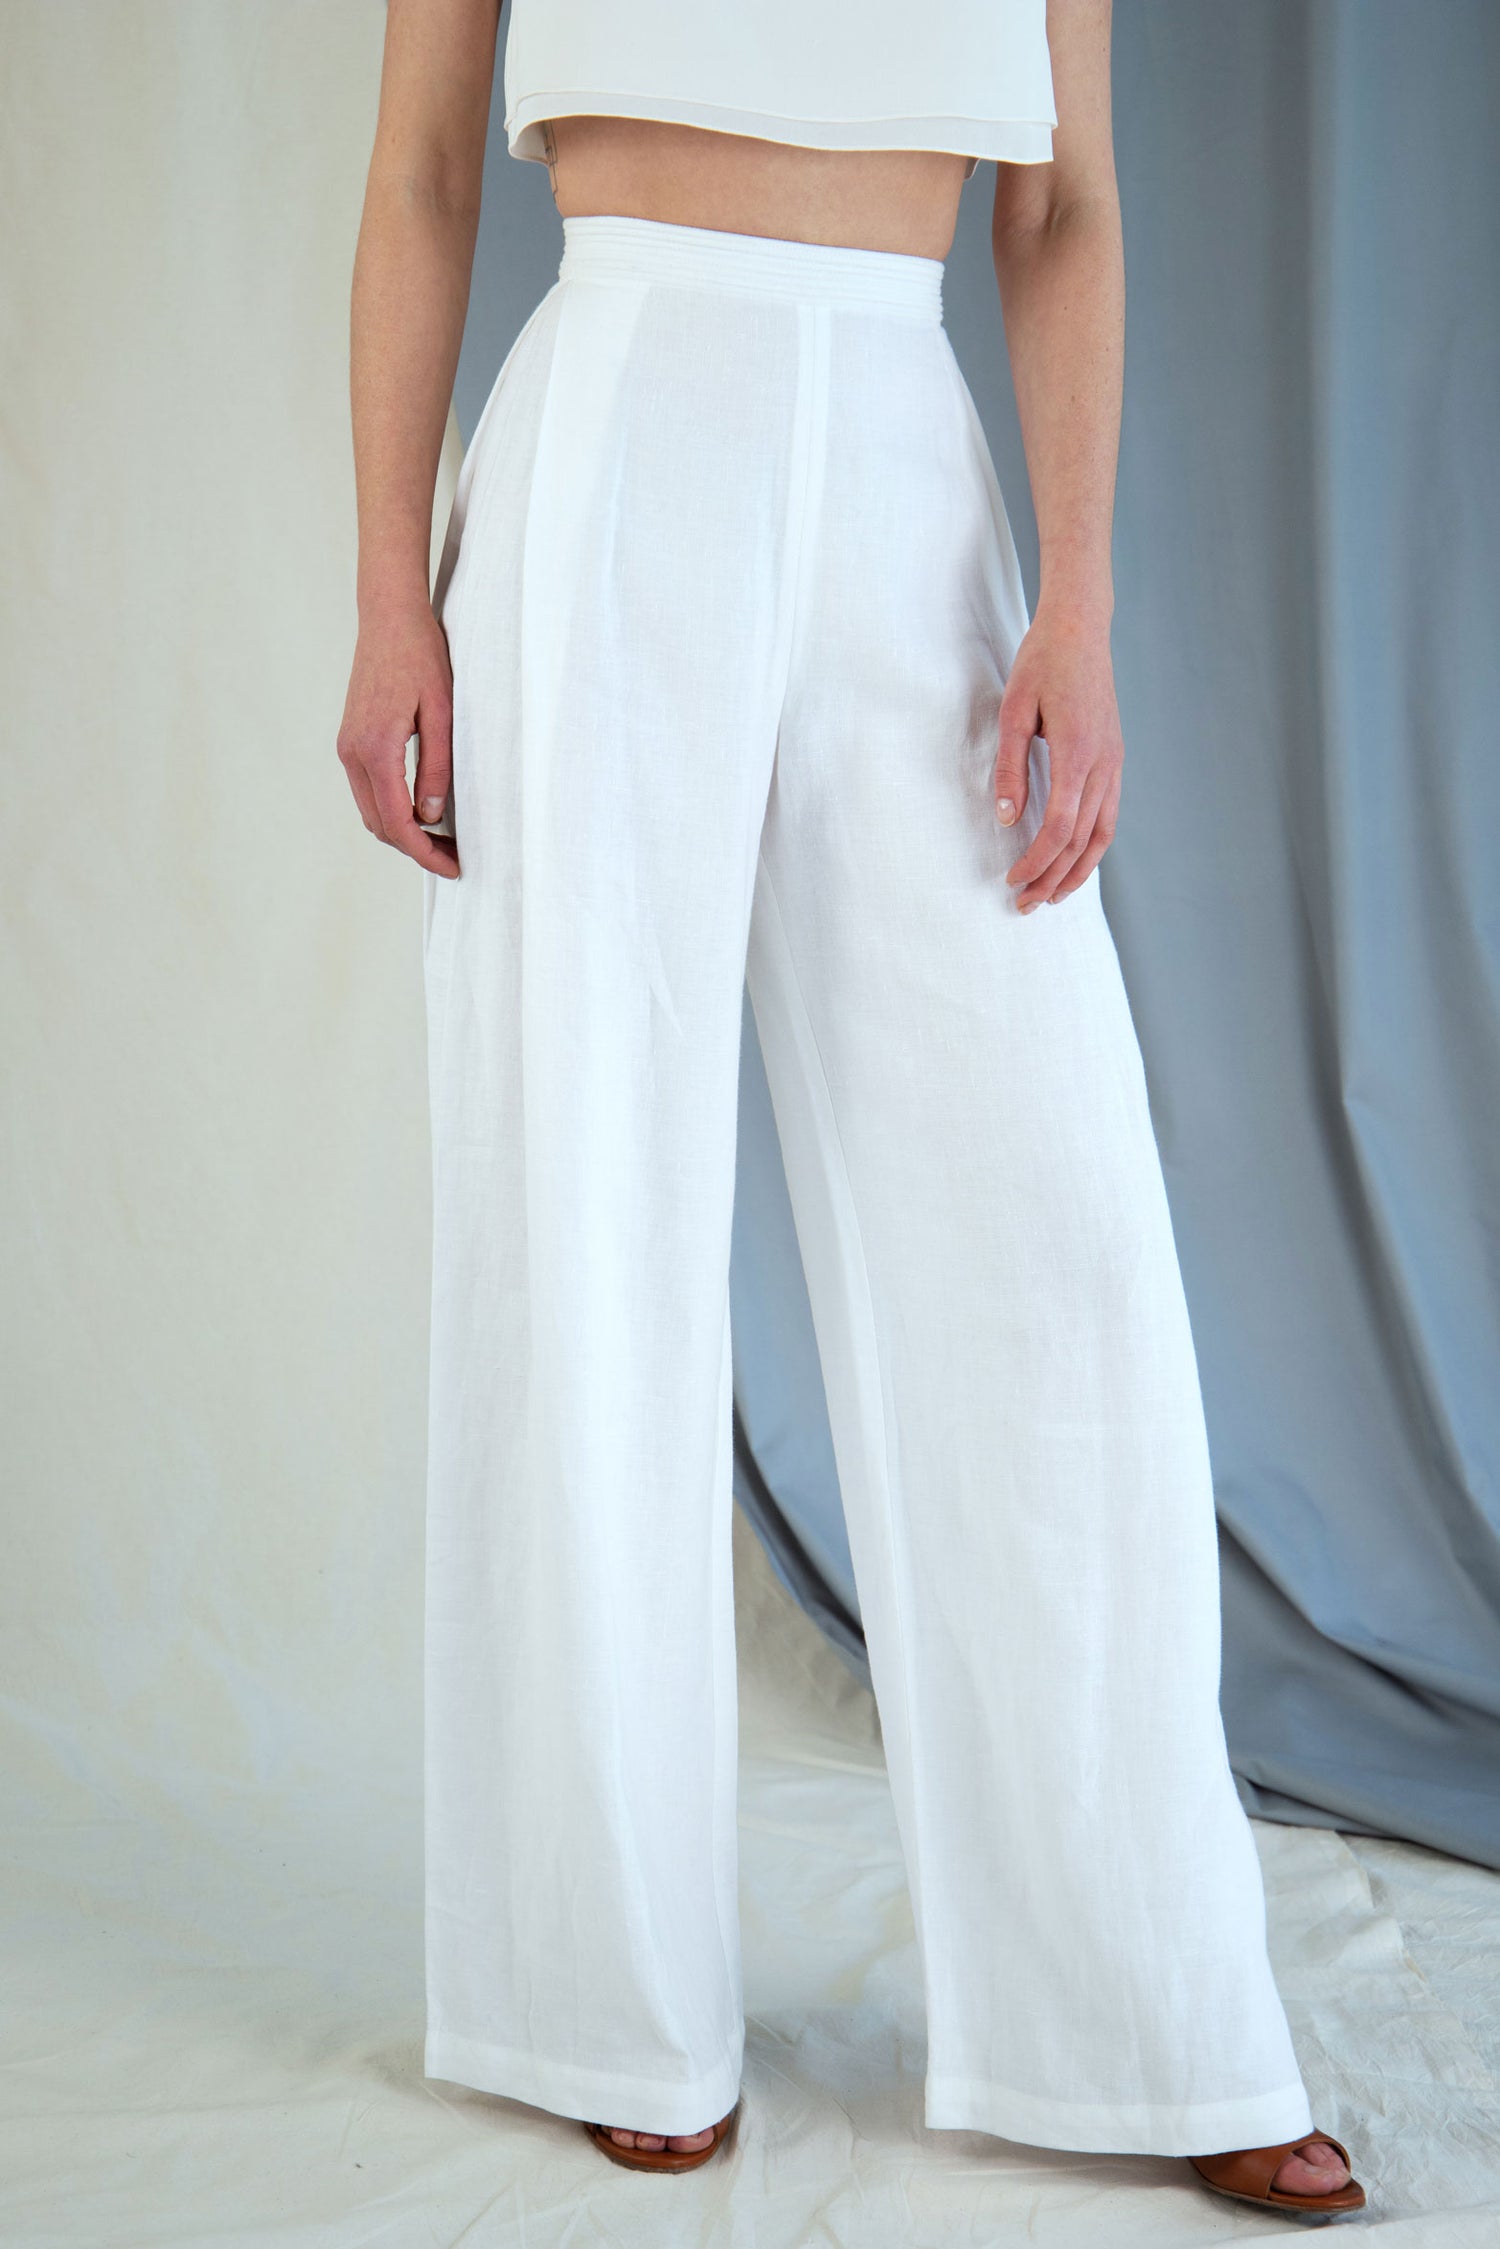 Women's Fashion White linen Pants For Women Tightness Trousers Pocket  Casual Plus Size Pants winter clothes for women - Walmart.com